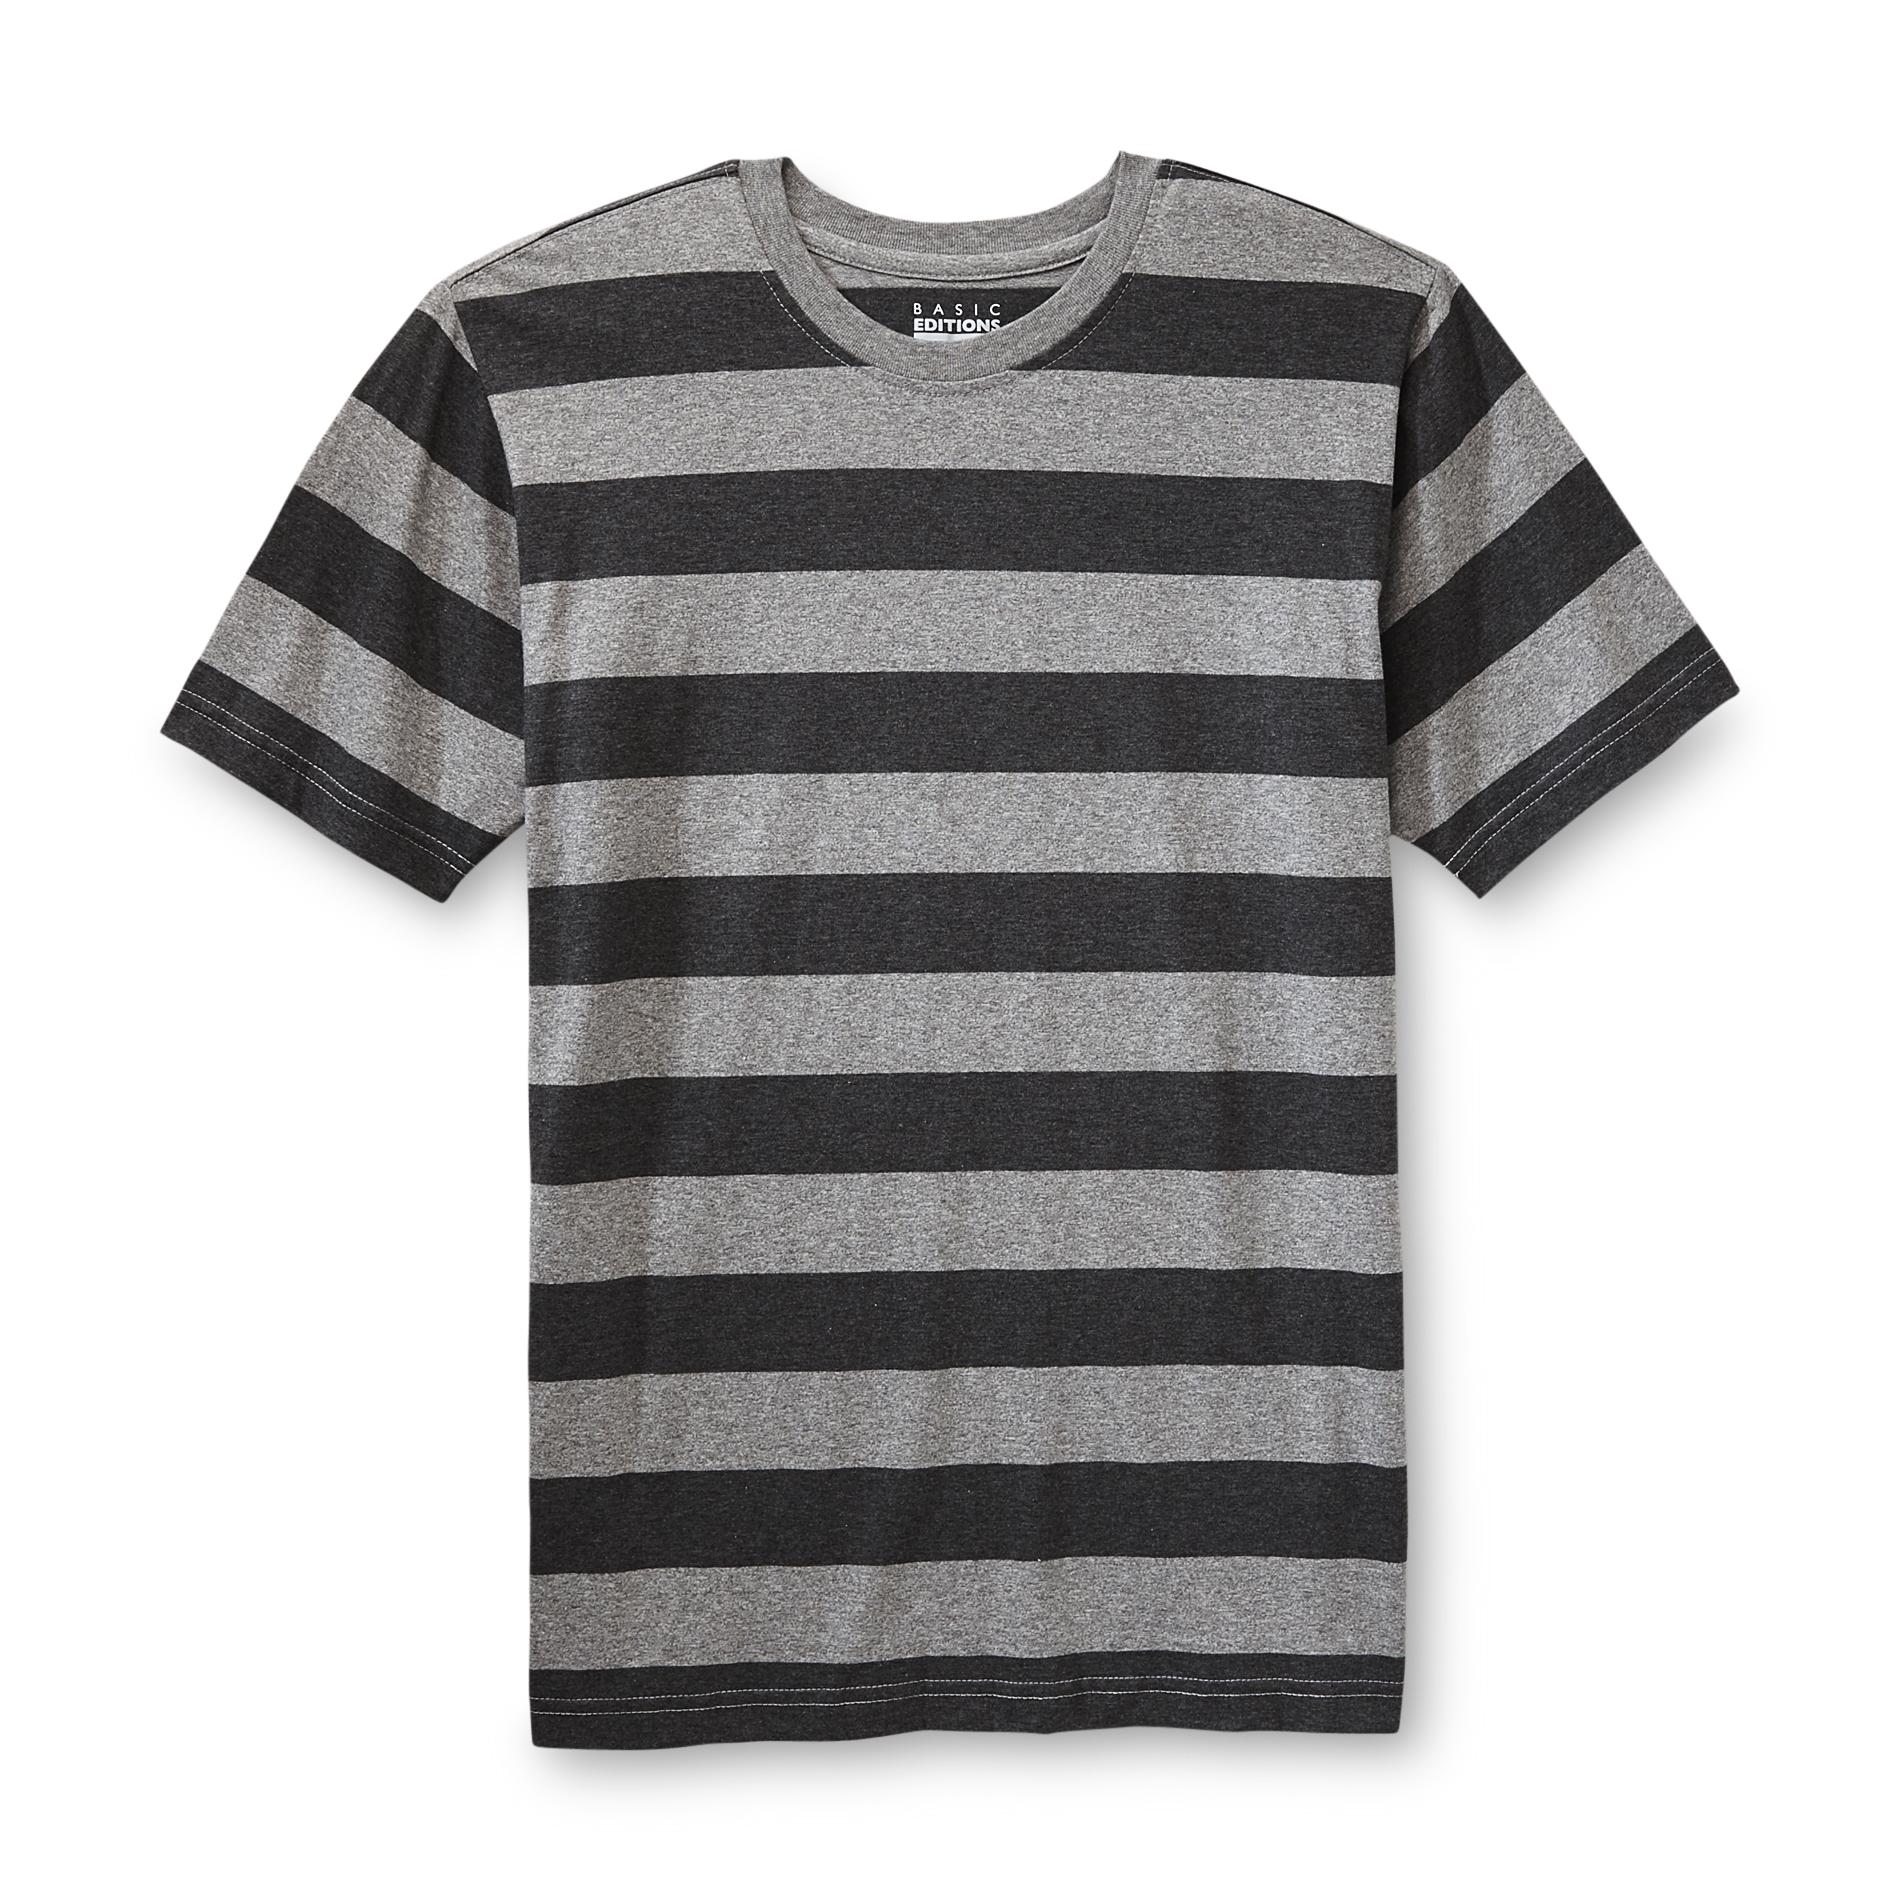 Basic Editions Men's Crew Neck T-Shirt - Striped